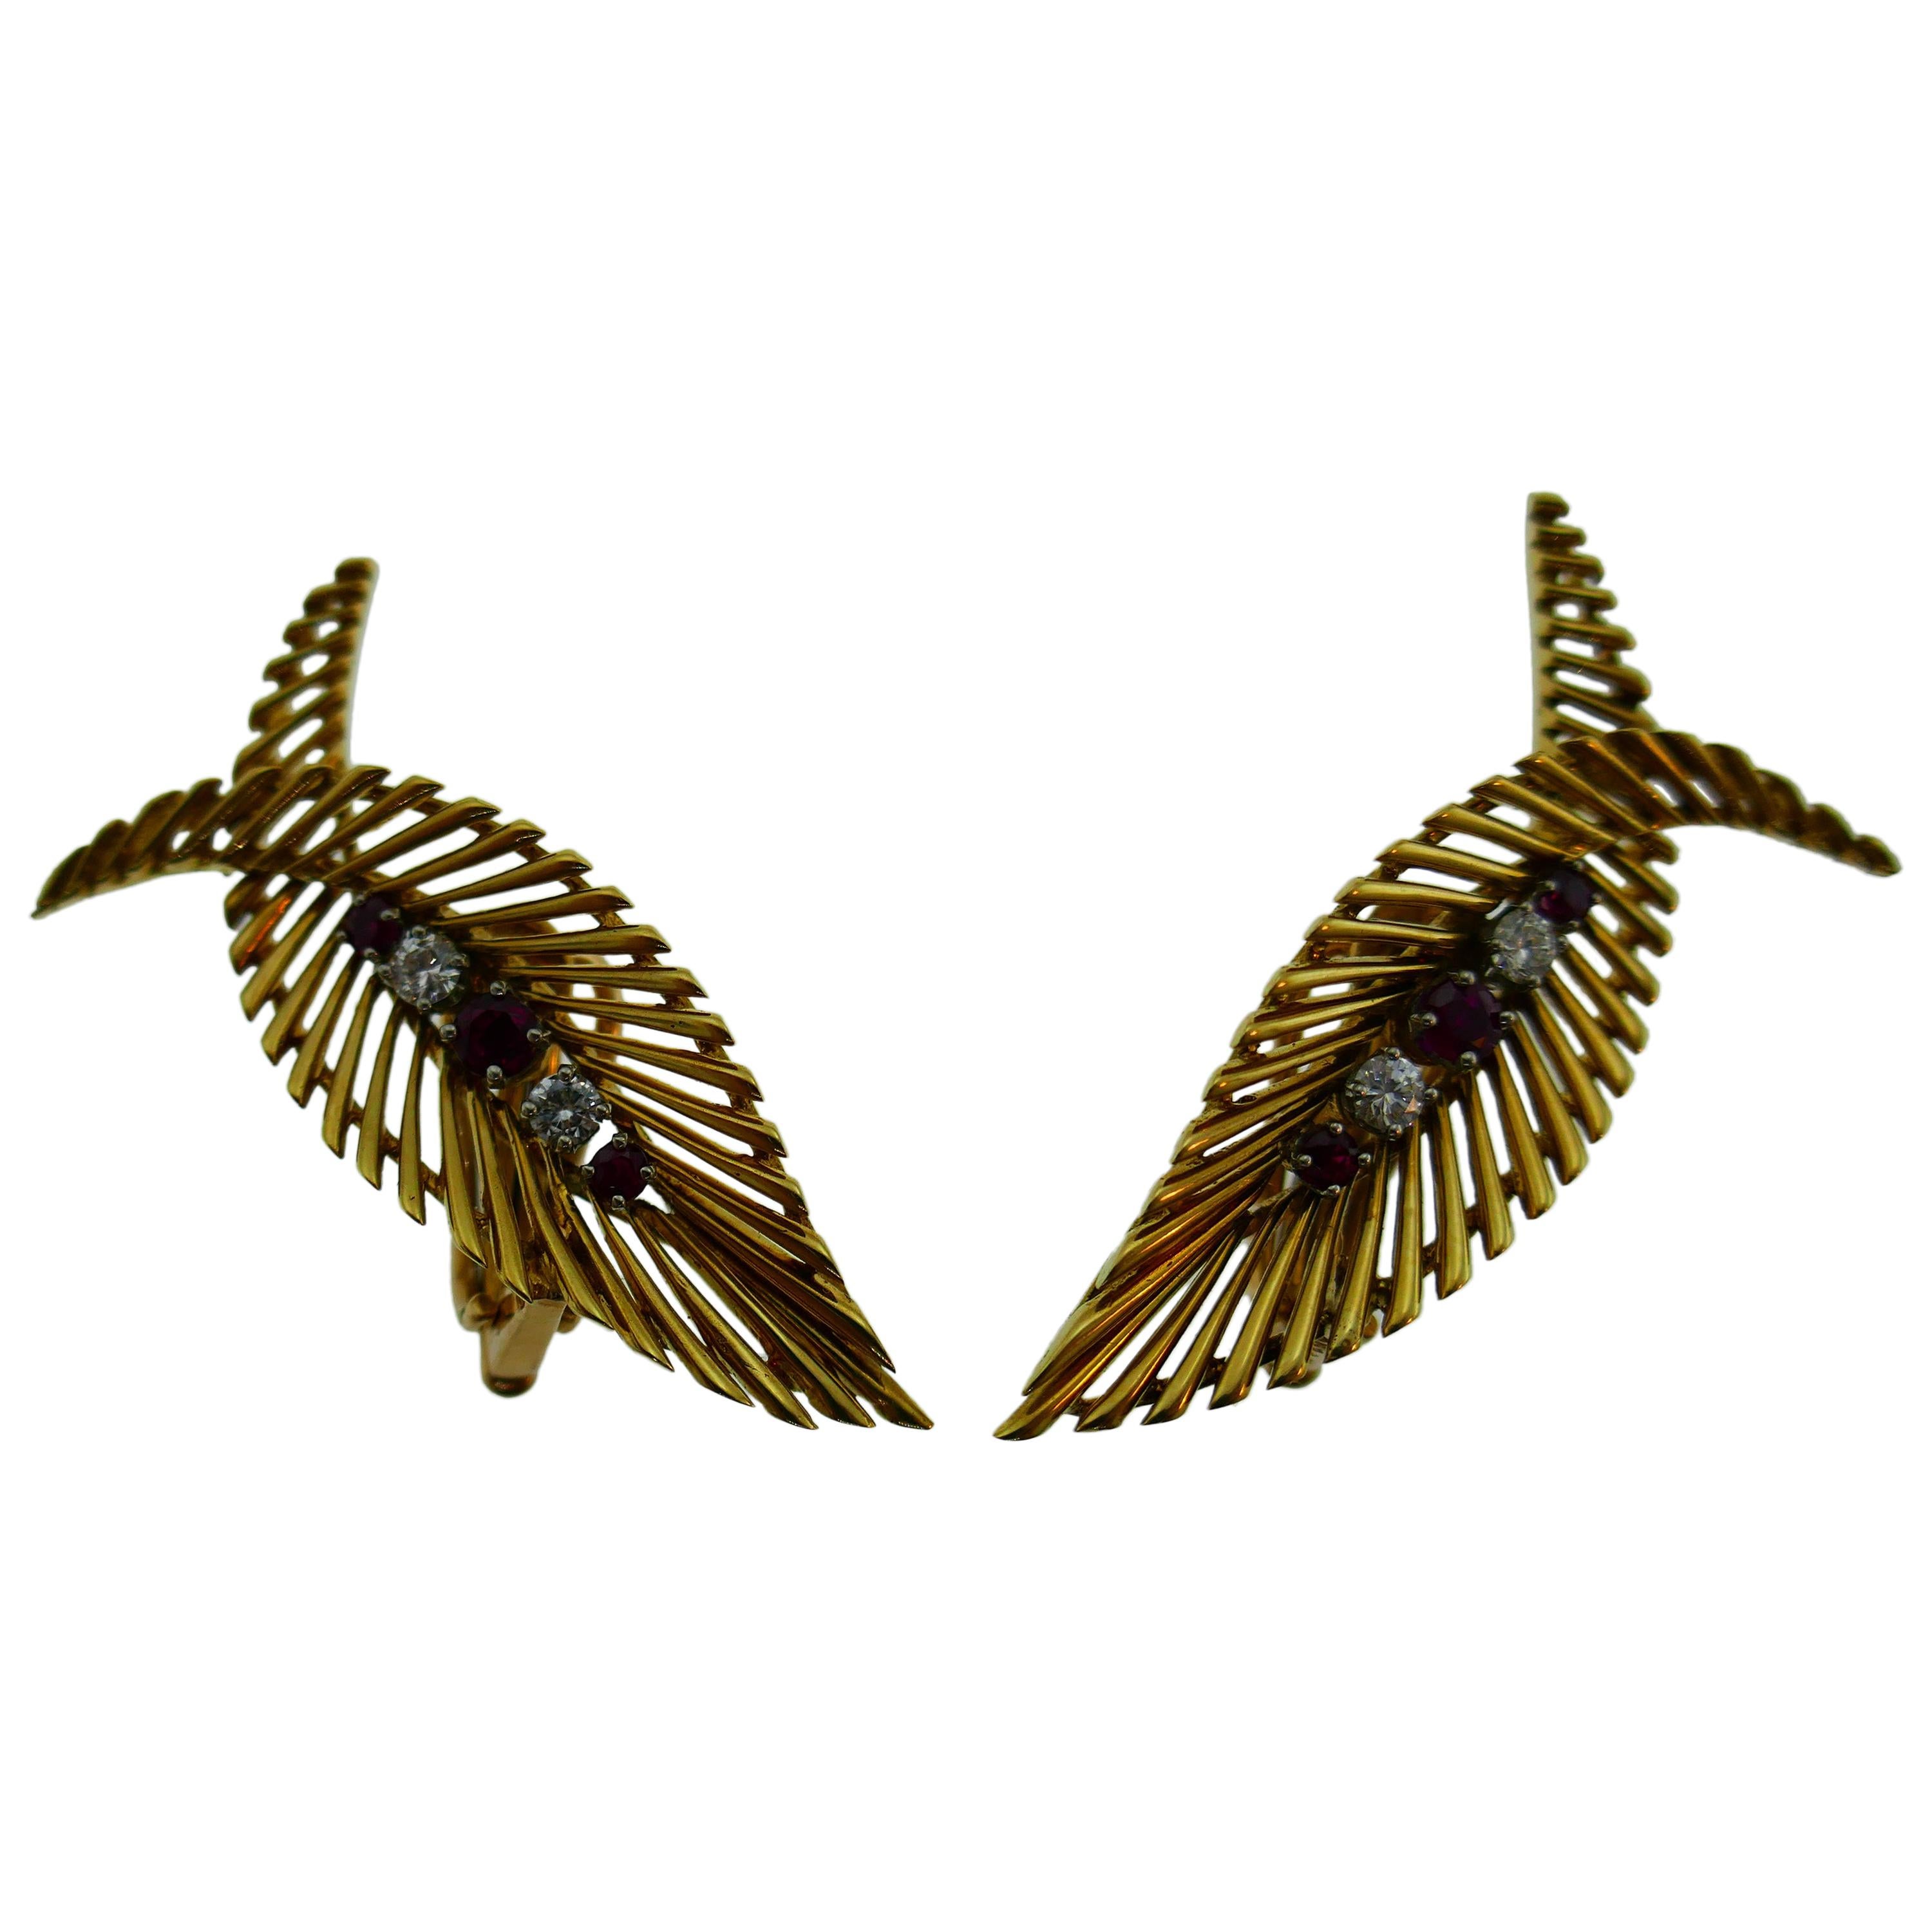 Tiffany & Co. Retro 18 Karat Gold, Ruby and Diamond Leaf Motif Clip-On Earrings